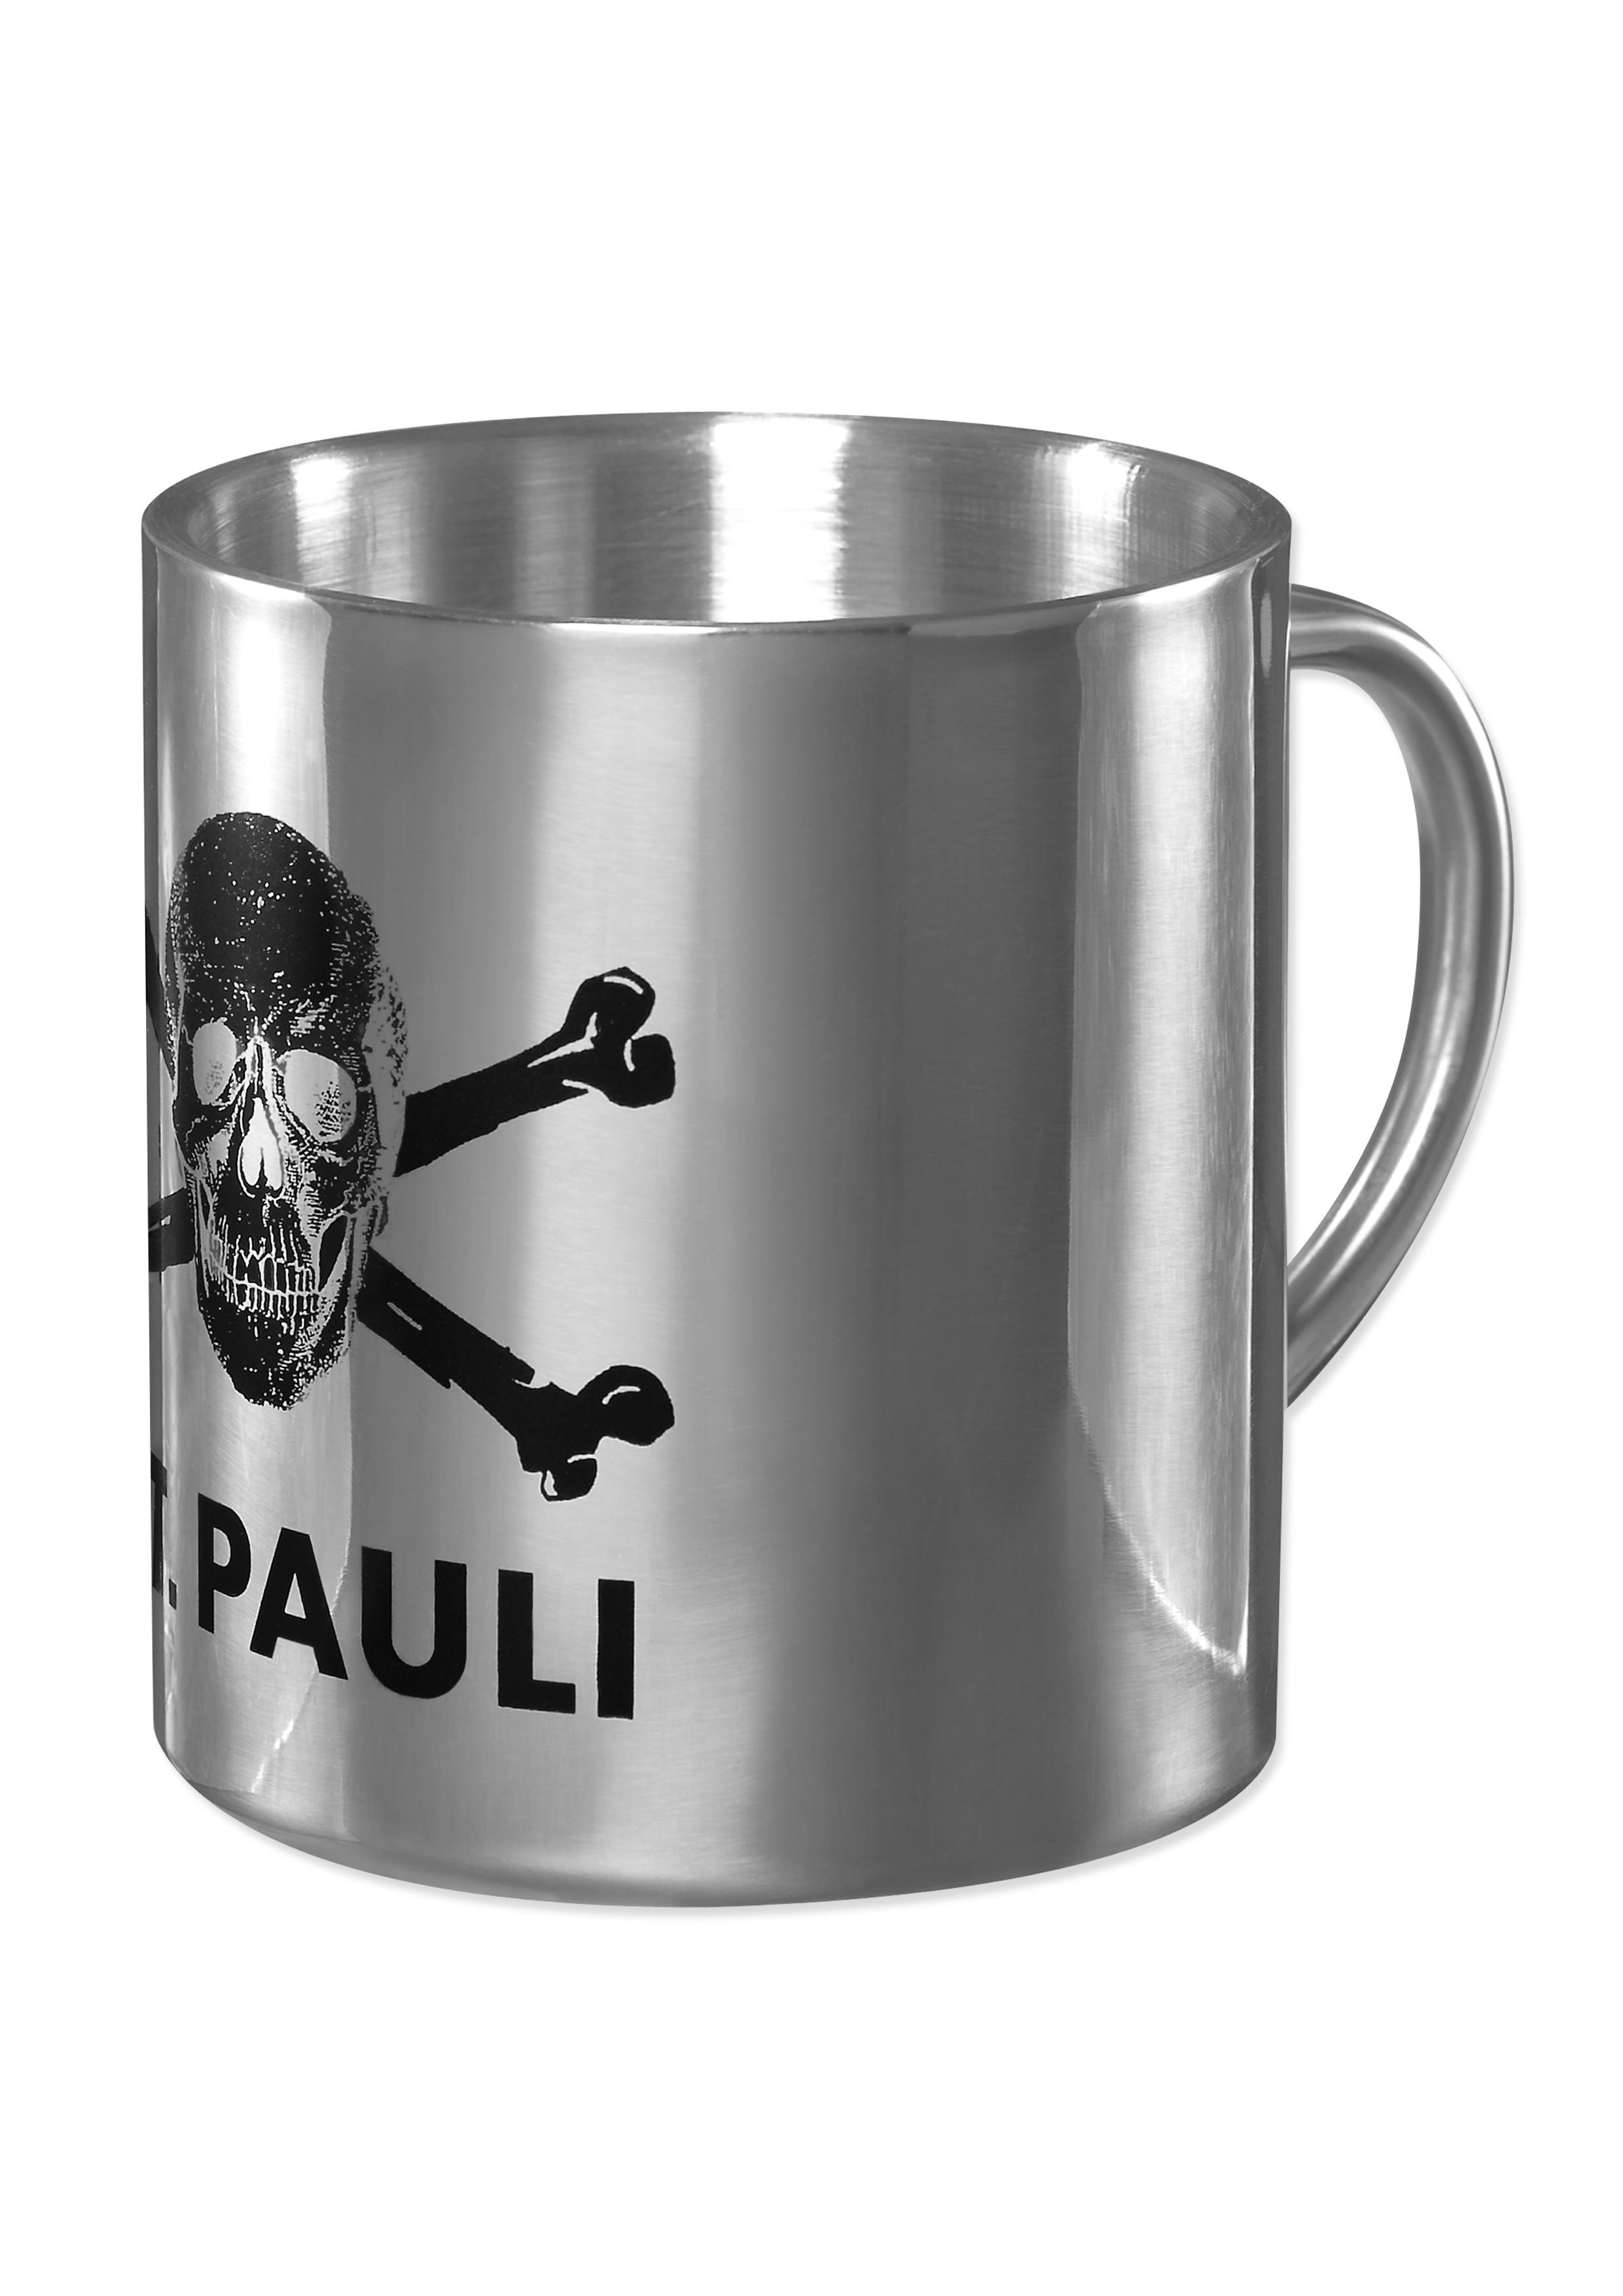 Skull and crossbones coffee mug, stainless steel